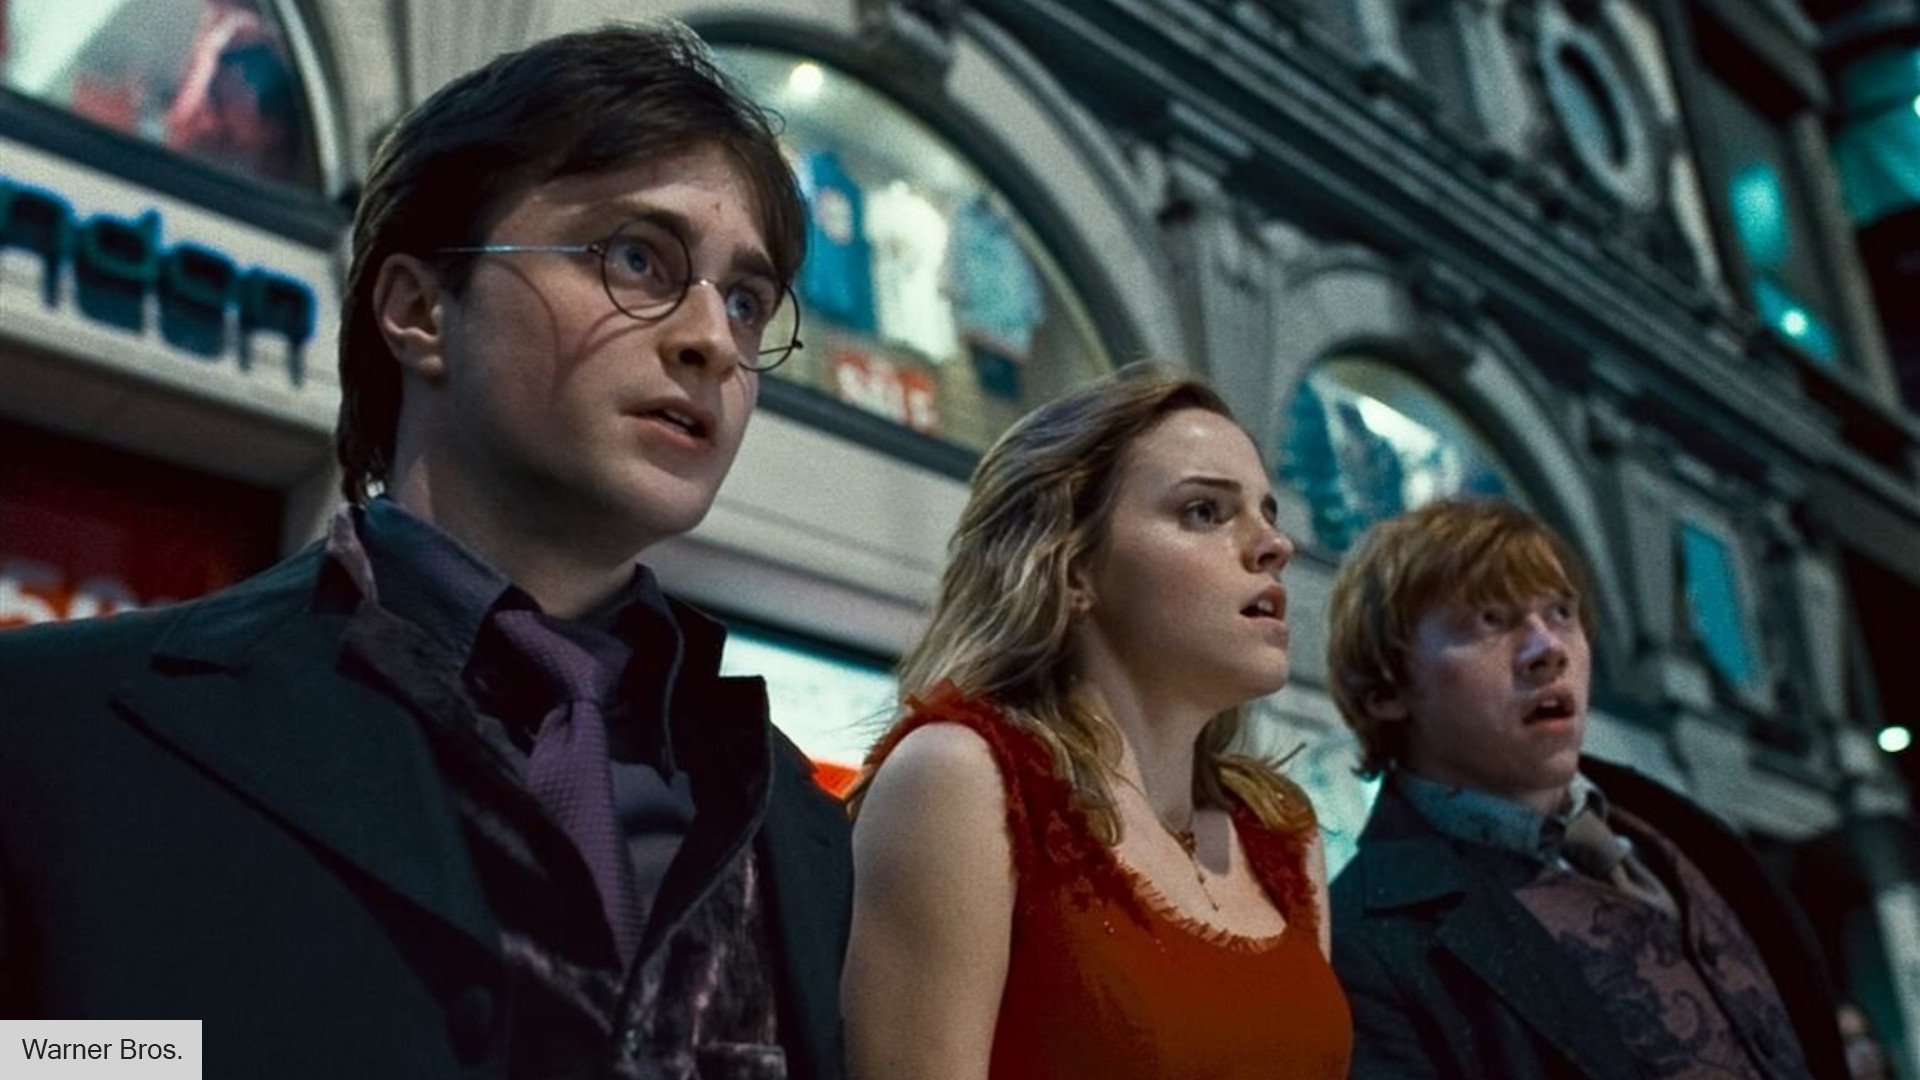 Harry Potter 20th anniversary trailer brings original cast back to Hogwarts  | The Digital Fix